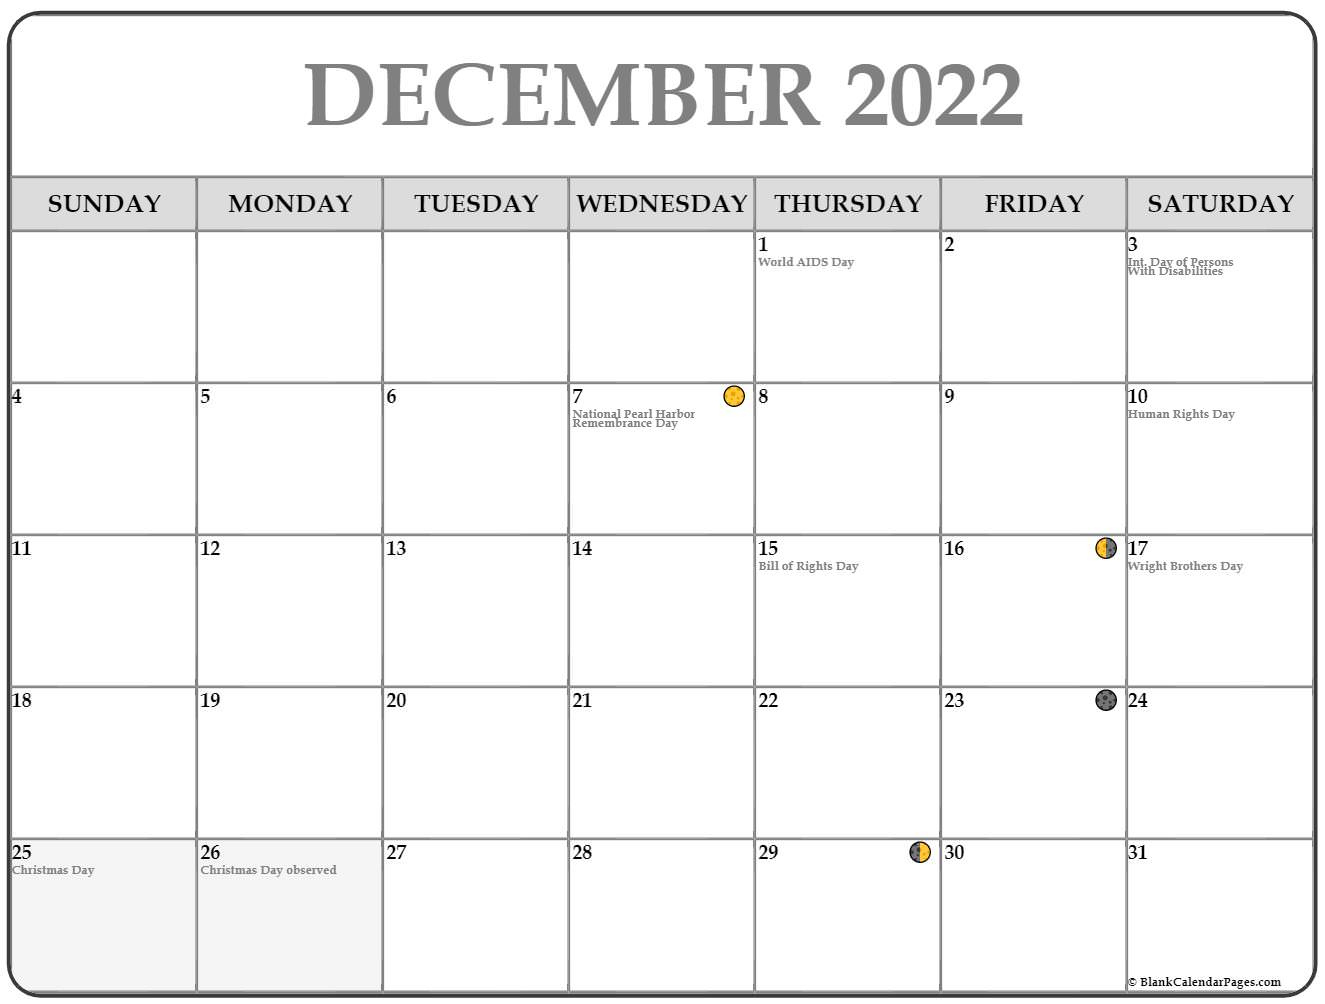 December 2022 Lunar Calendar | Moon Phase Calendar Calendar December 2022 Printable